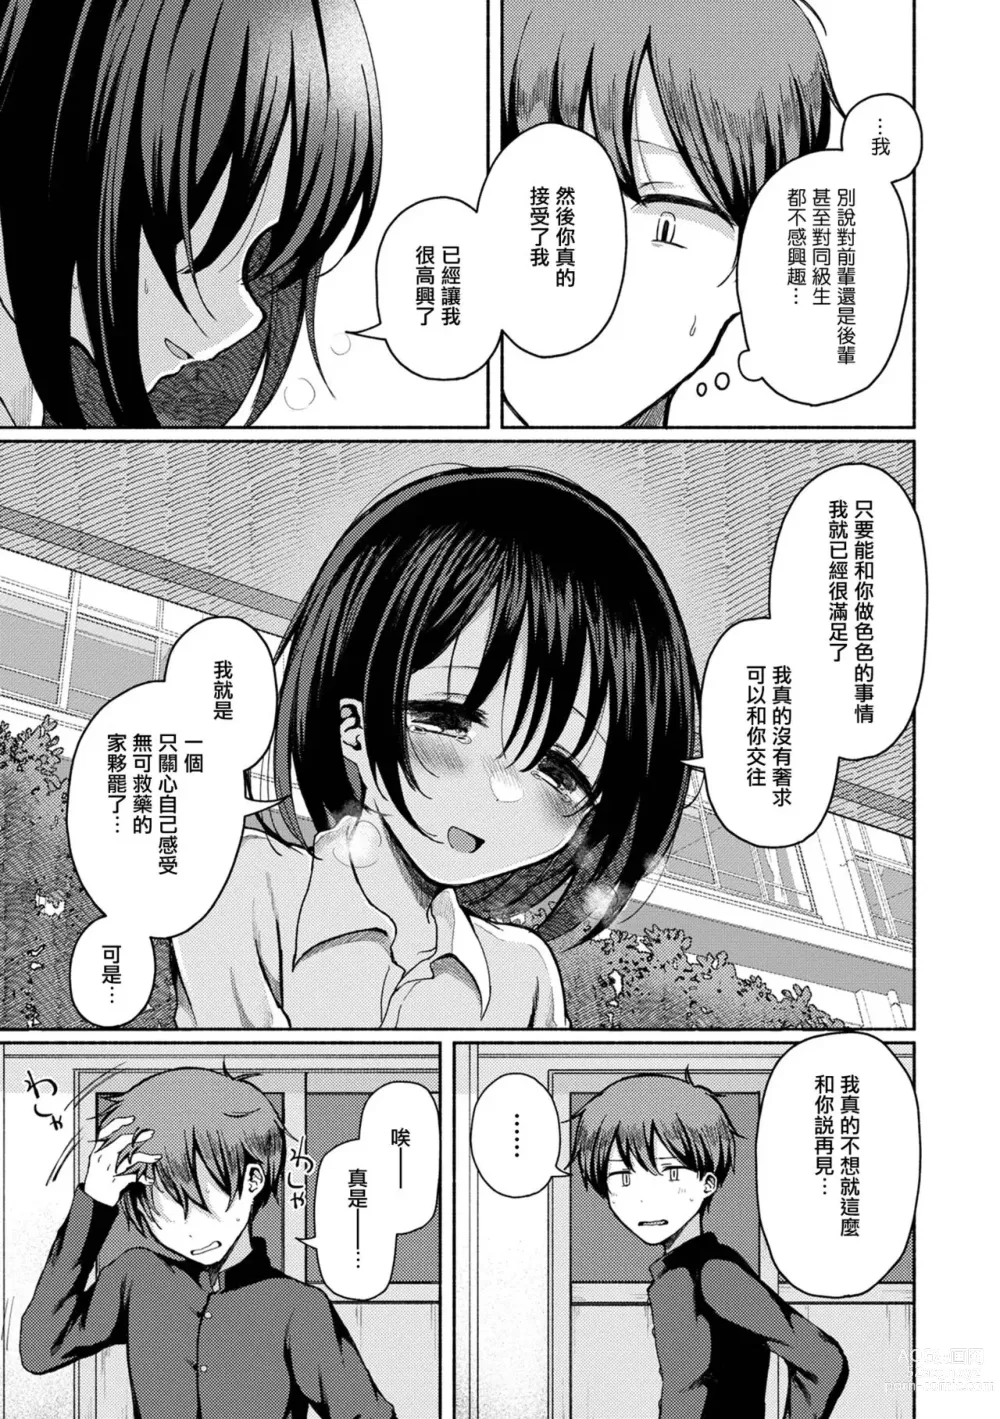 Page 4 of manga Anoko wa Yappari Doko demo Yaritagaru